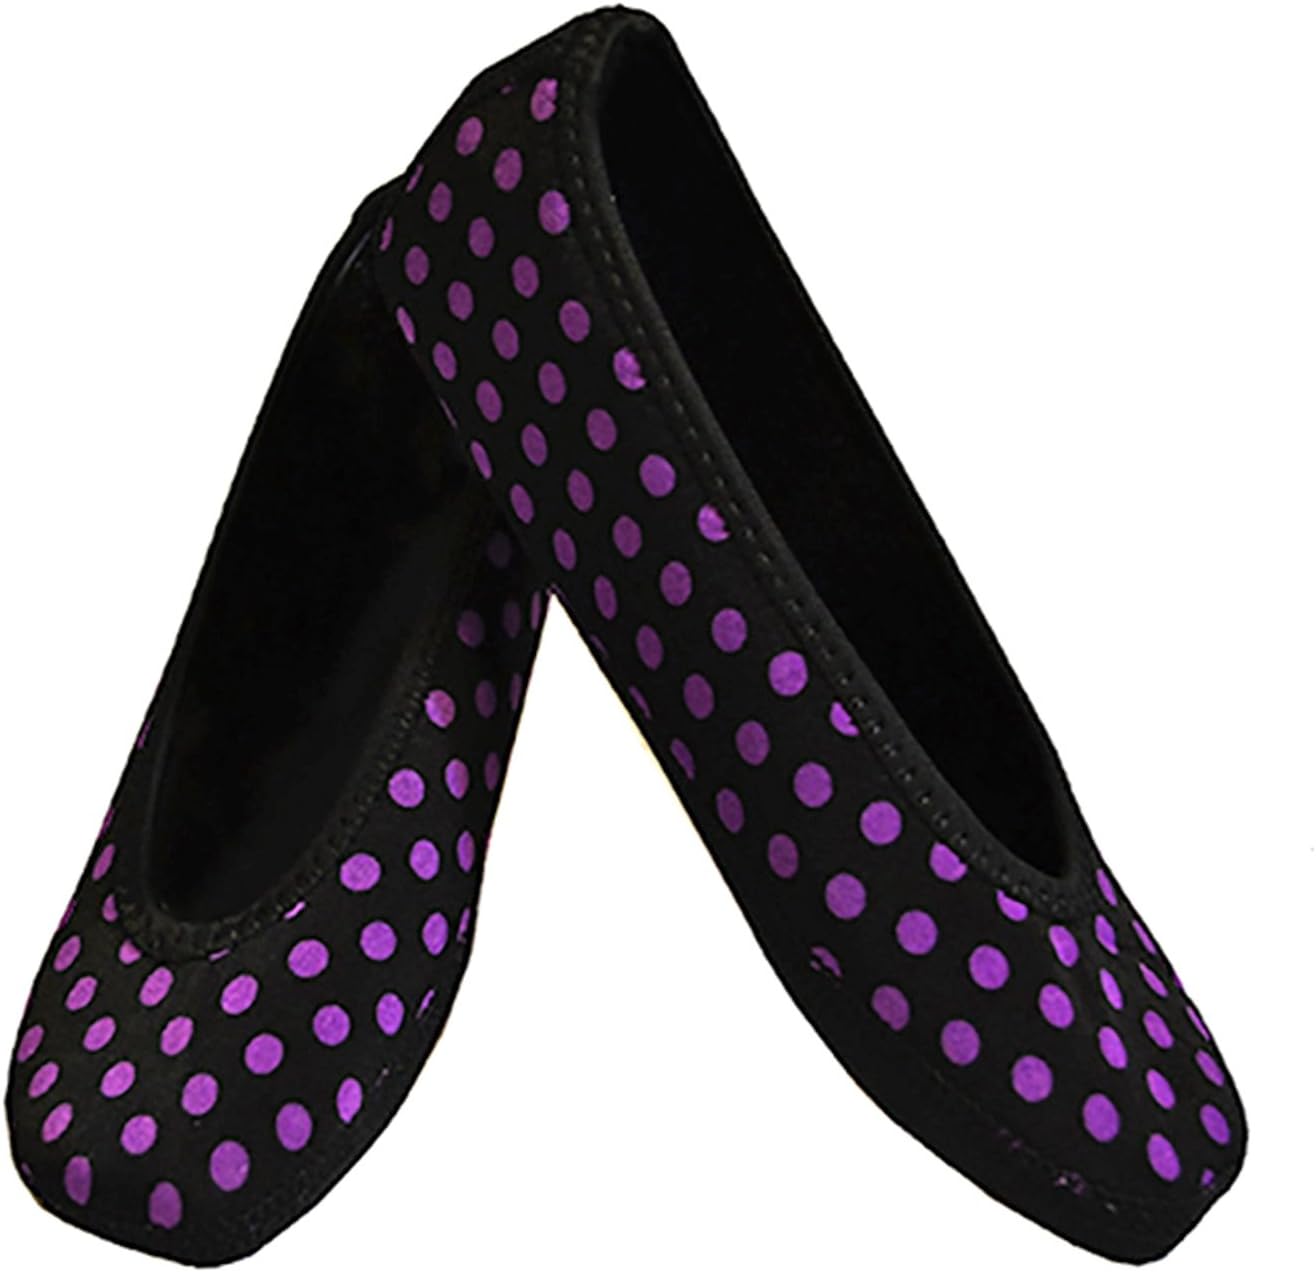 Nufoot Ballet Flats Women's Shoes Foldable & Flexible [...]